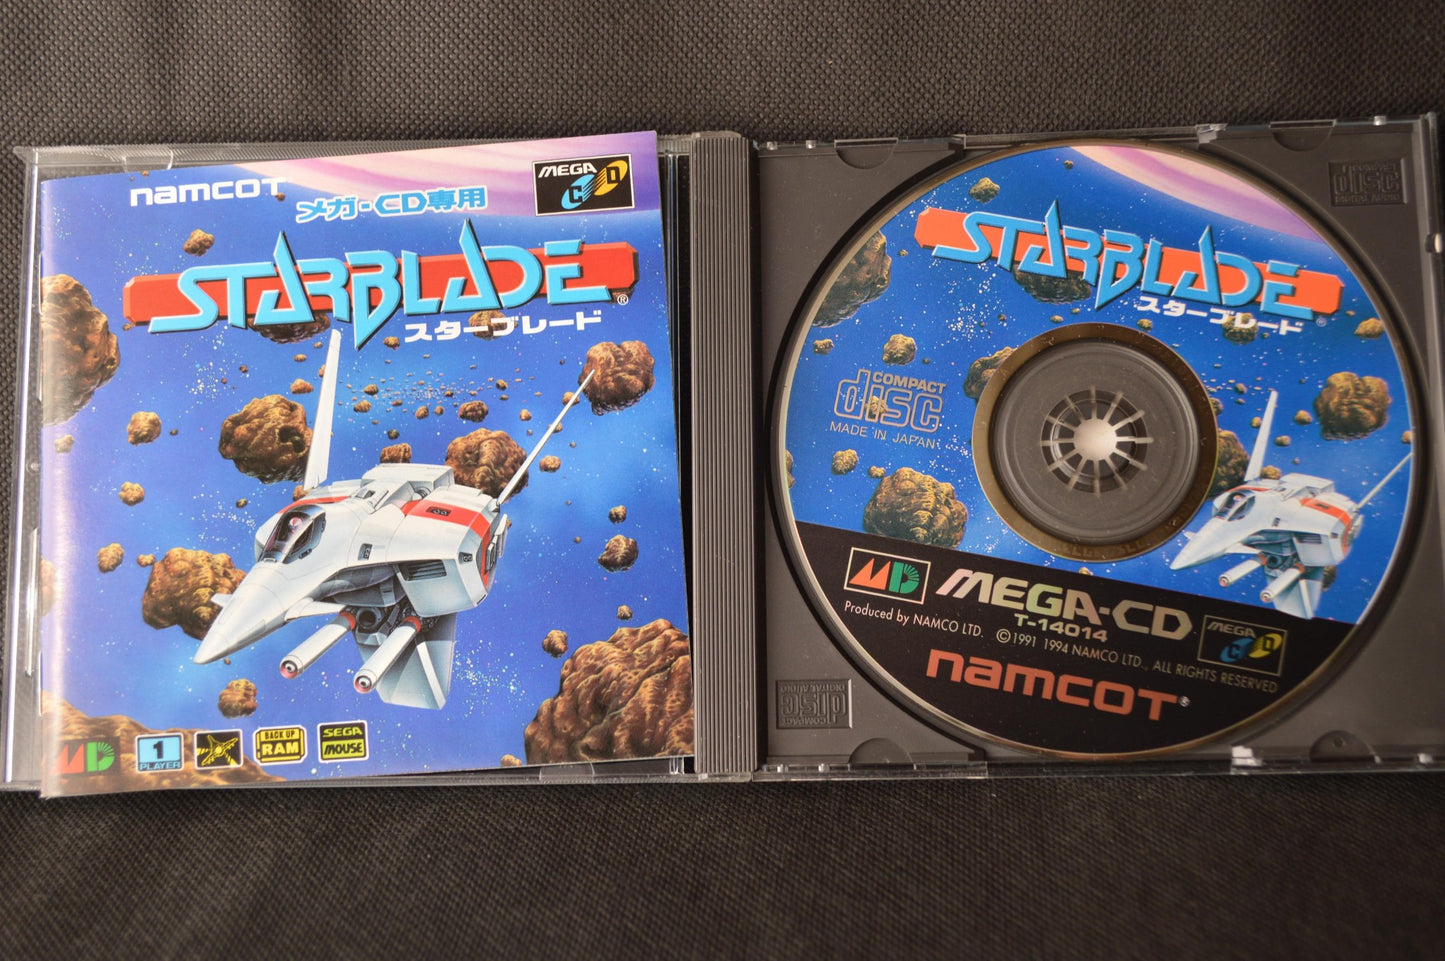 STAR BLADE MEGA CD MCD game Disk, Manual, Box set, Working -f1114-